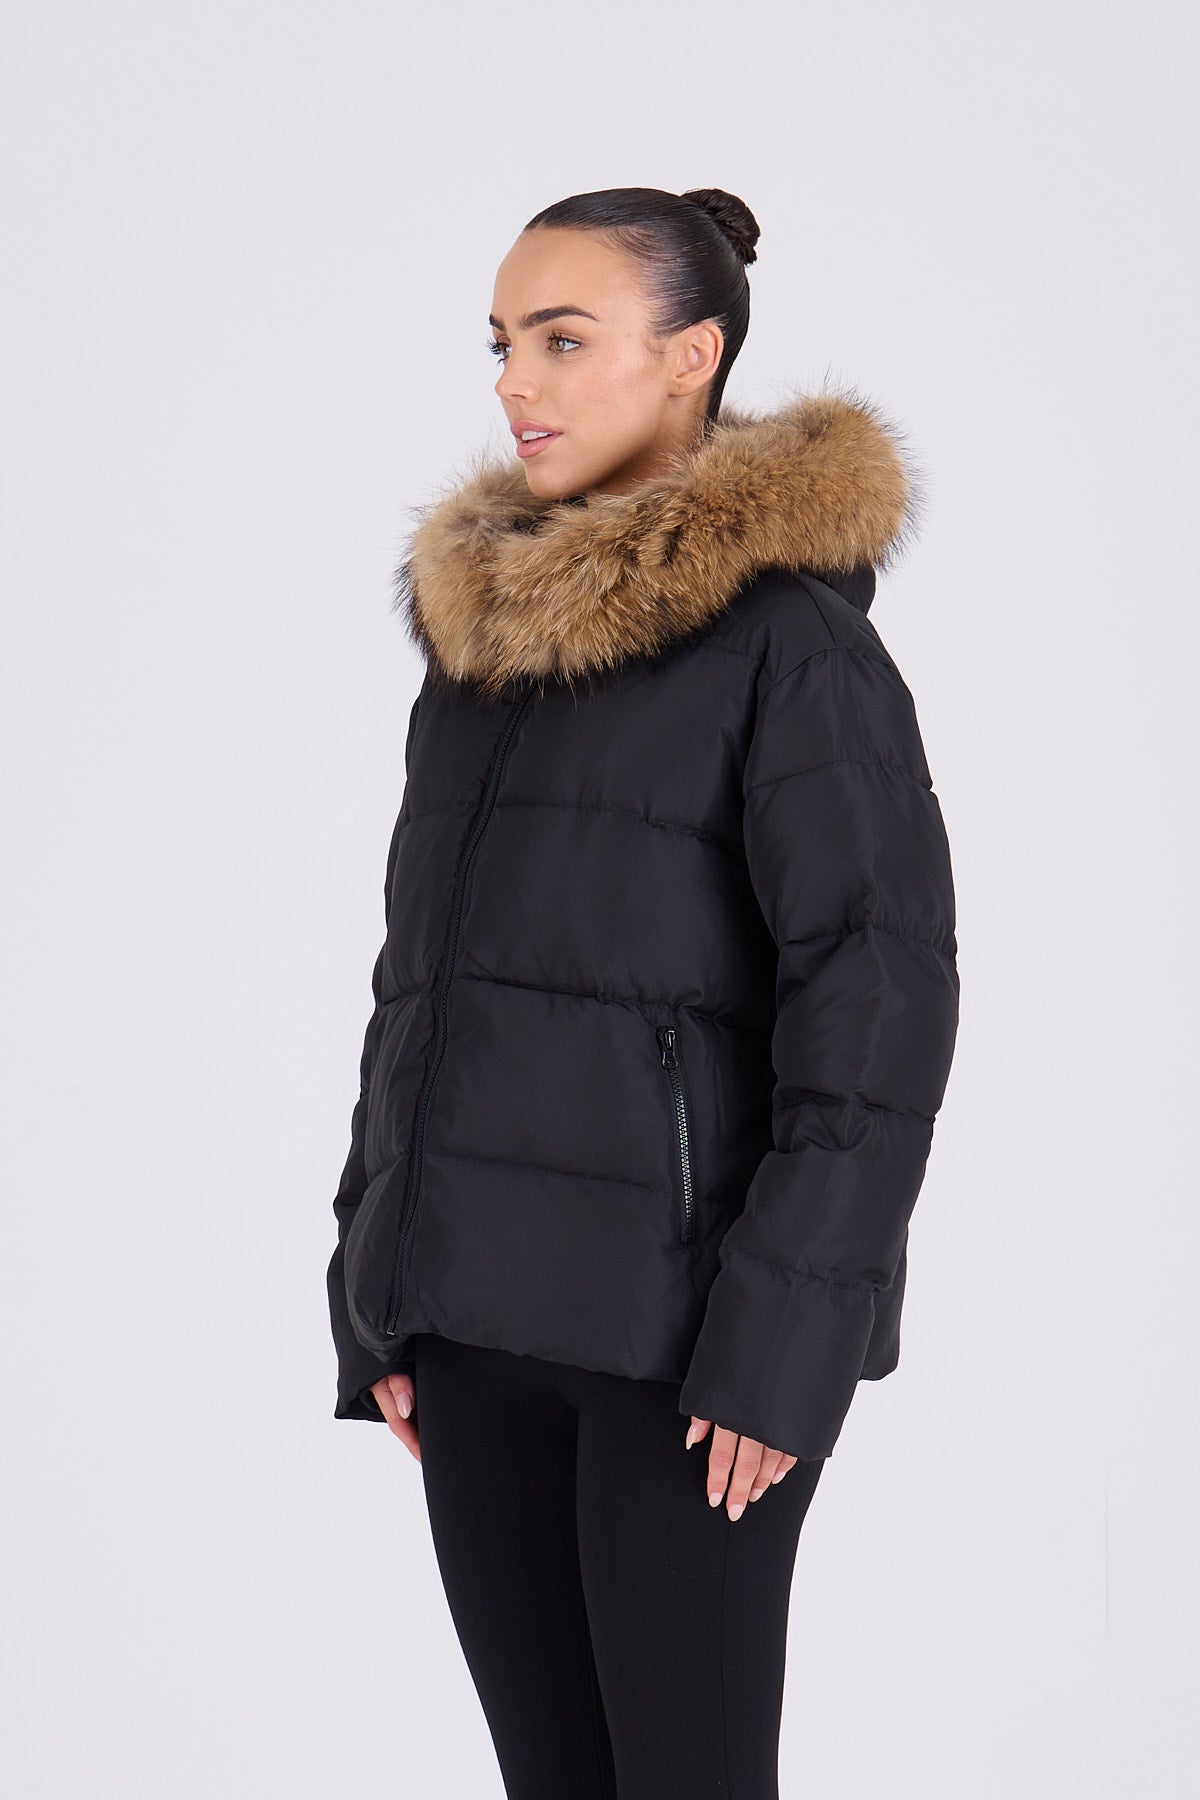 ADOLA Black Bomber Coat- Natural Fur